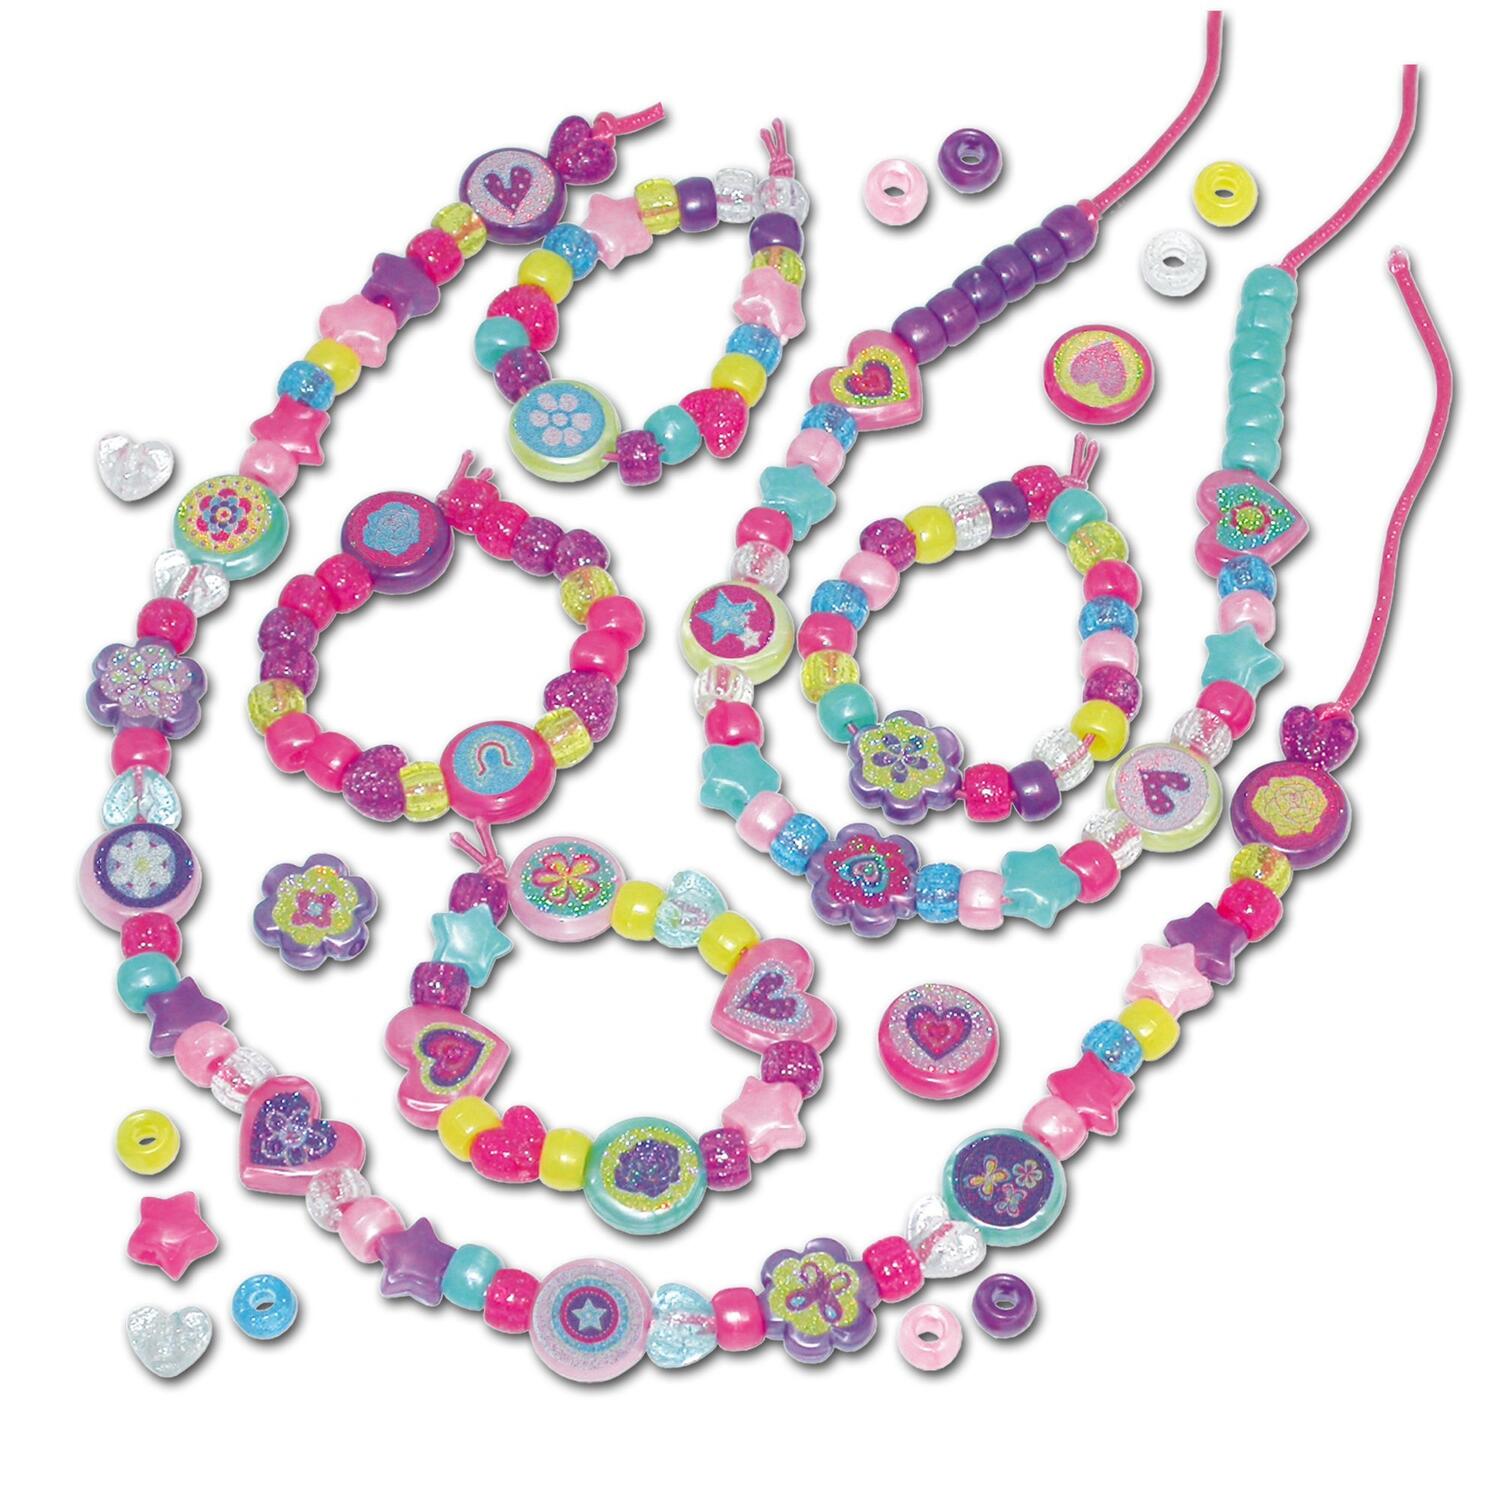 Fantastic Fashion: Bijuterii moderne Sparkle Jewellery PlayLearn Toys